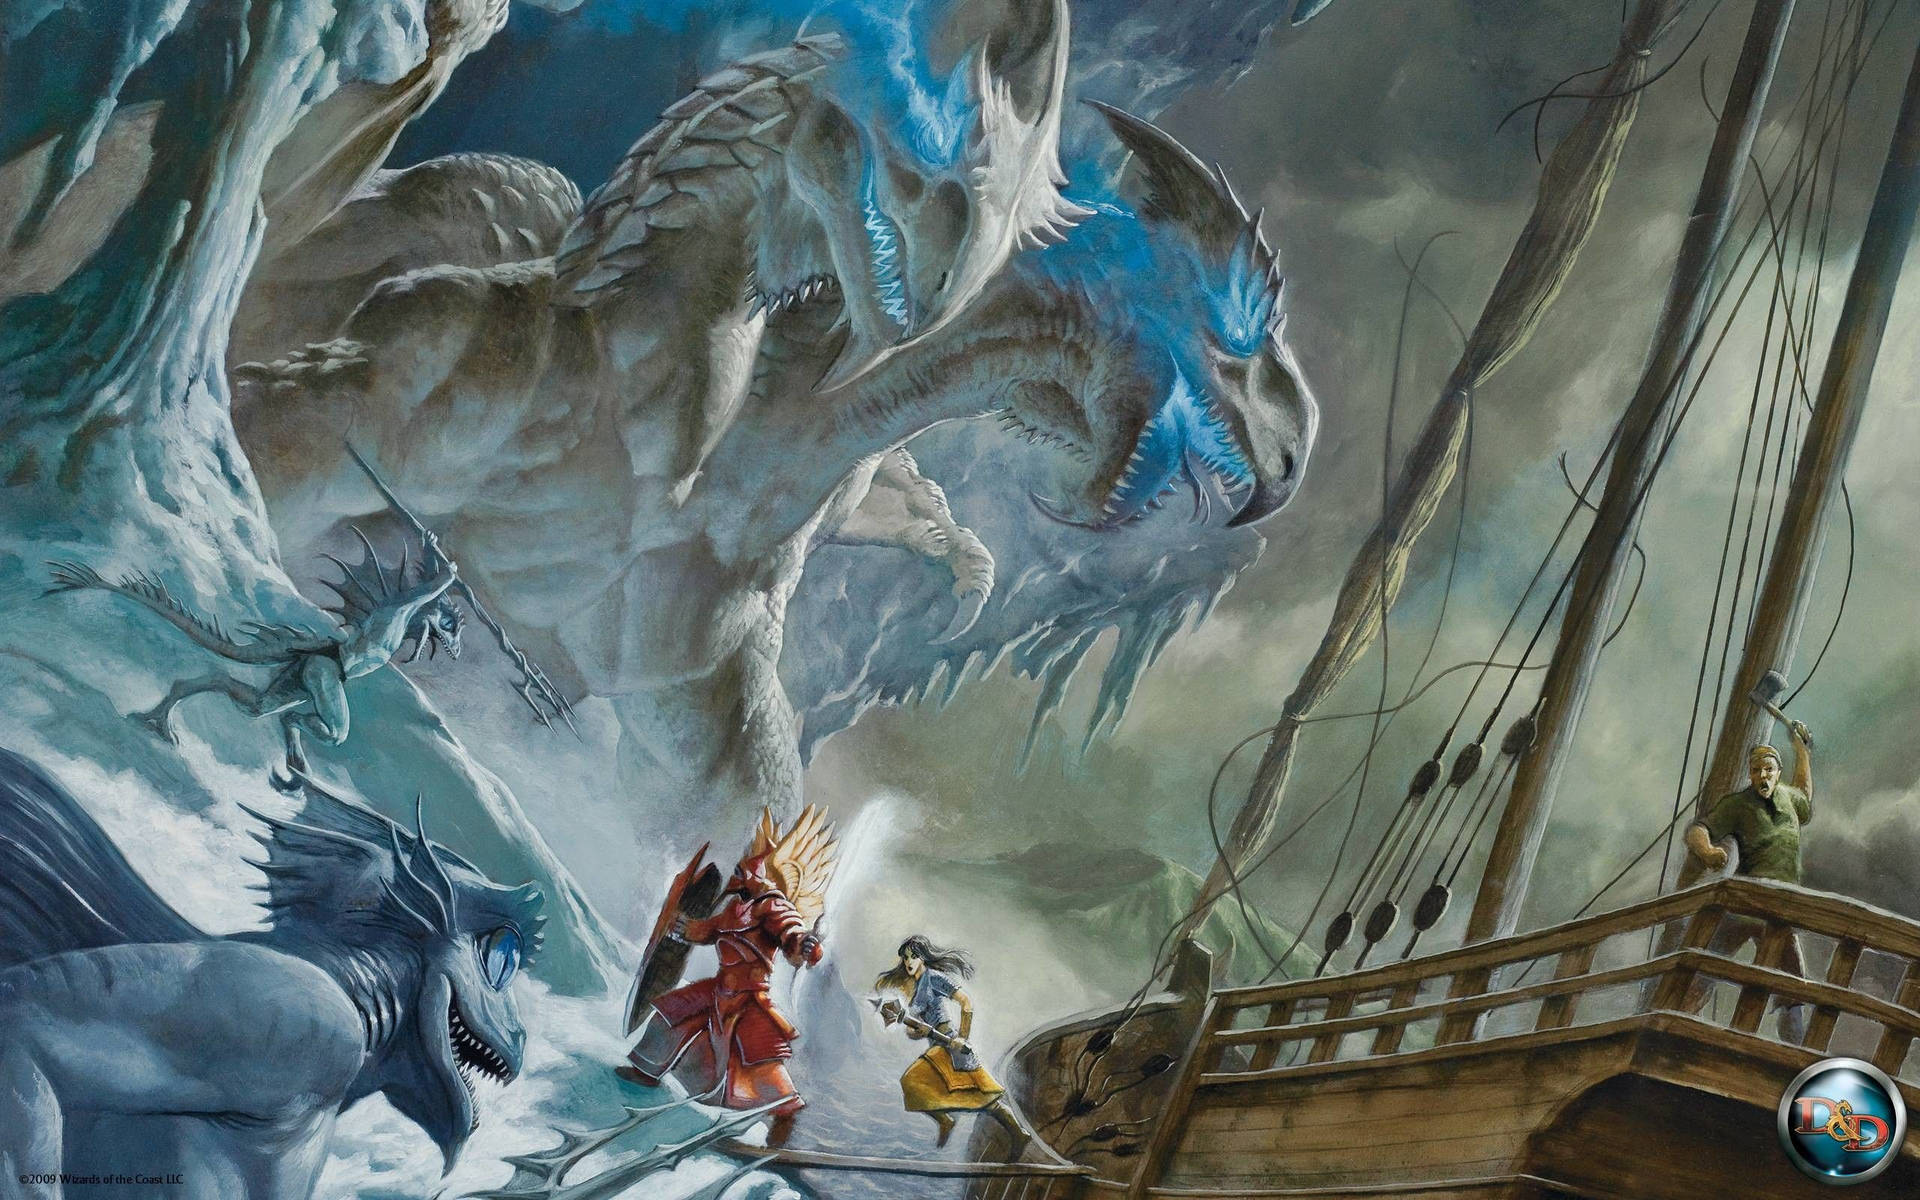 Caption: Epic Dragon Fantasy Battle - D&d Inspired Artwork Wallpaper